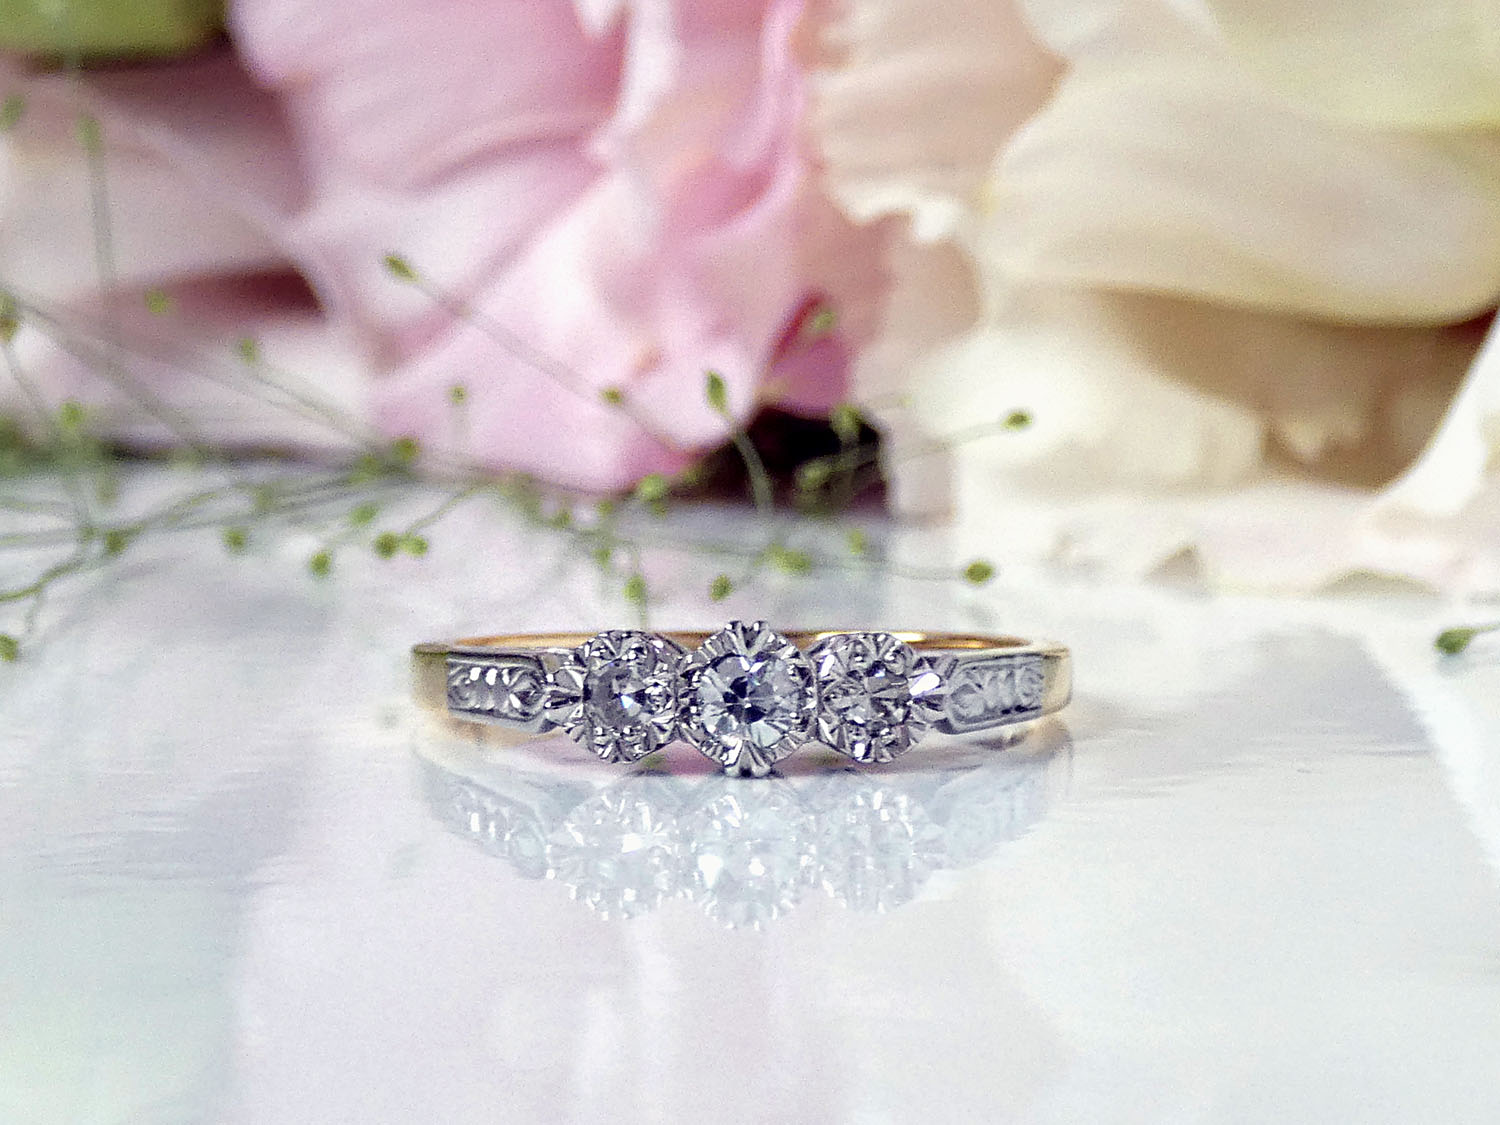 Bespoke wedding and engagement rings by Heulwen Lewis Bespoke